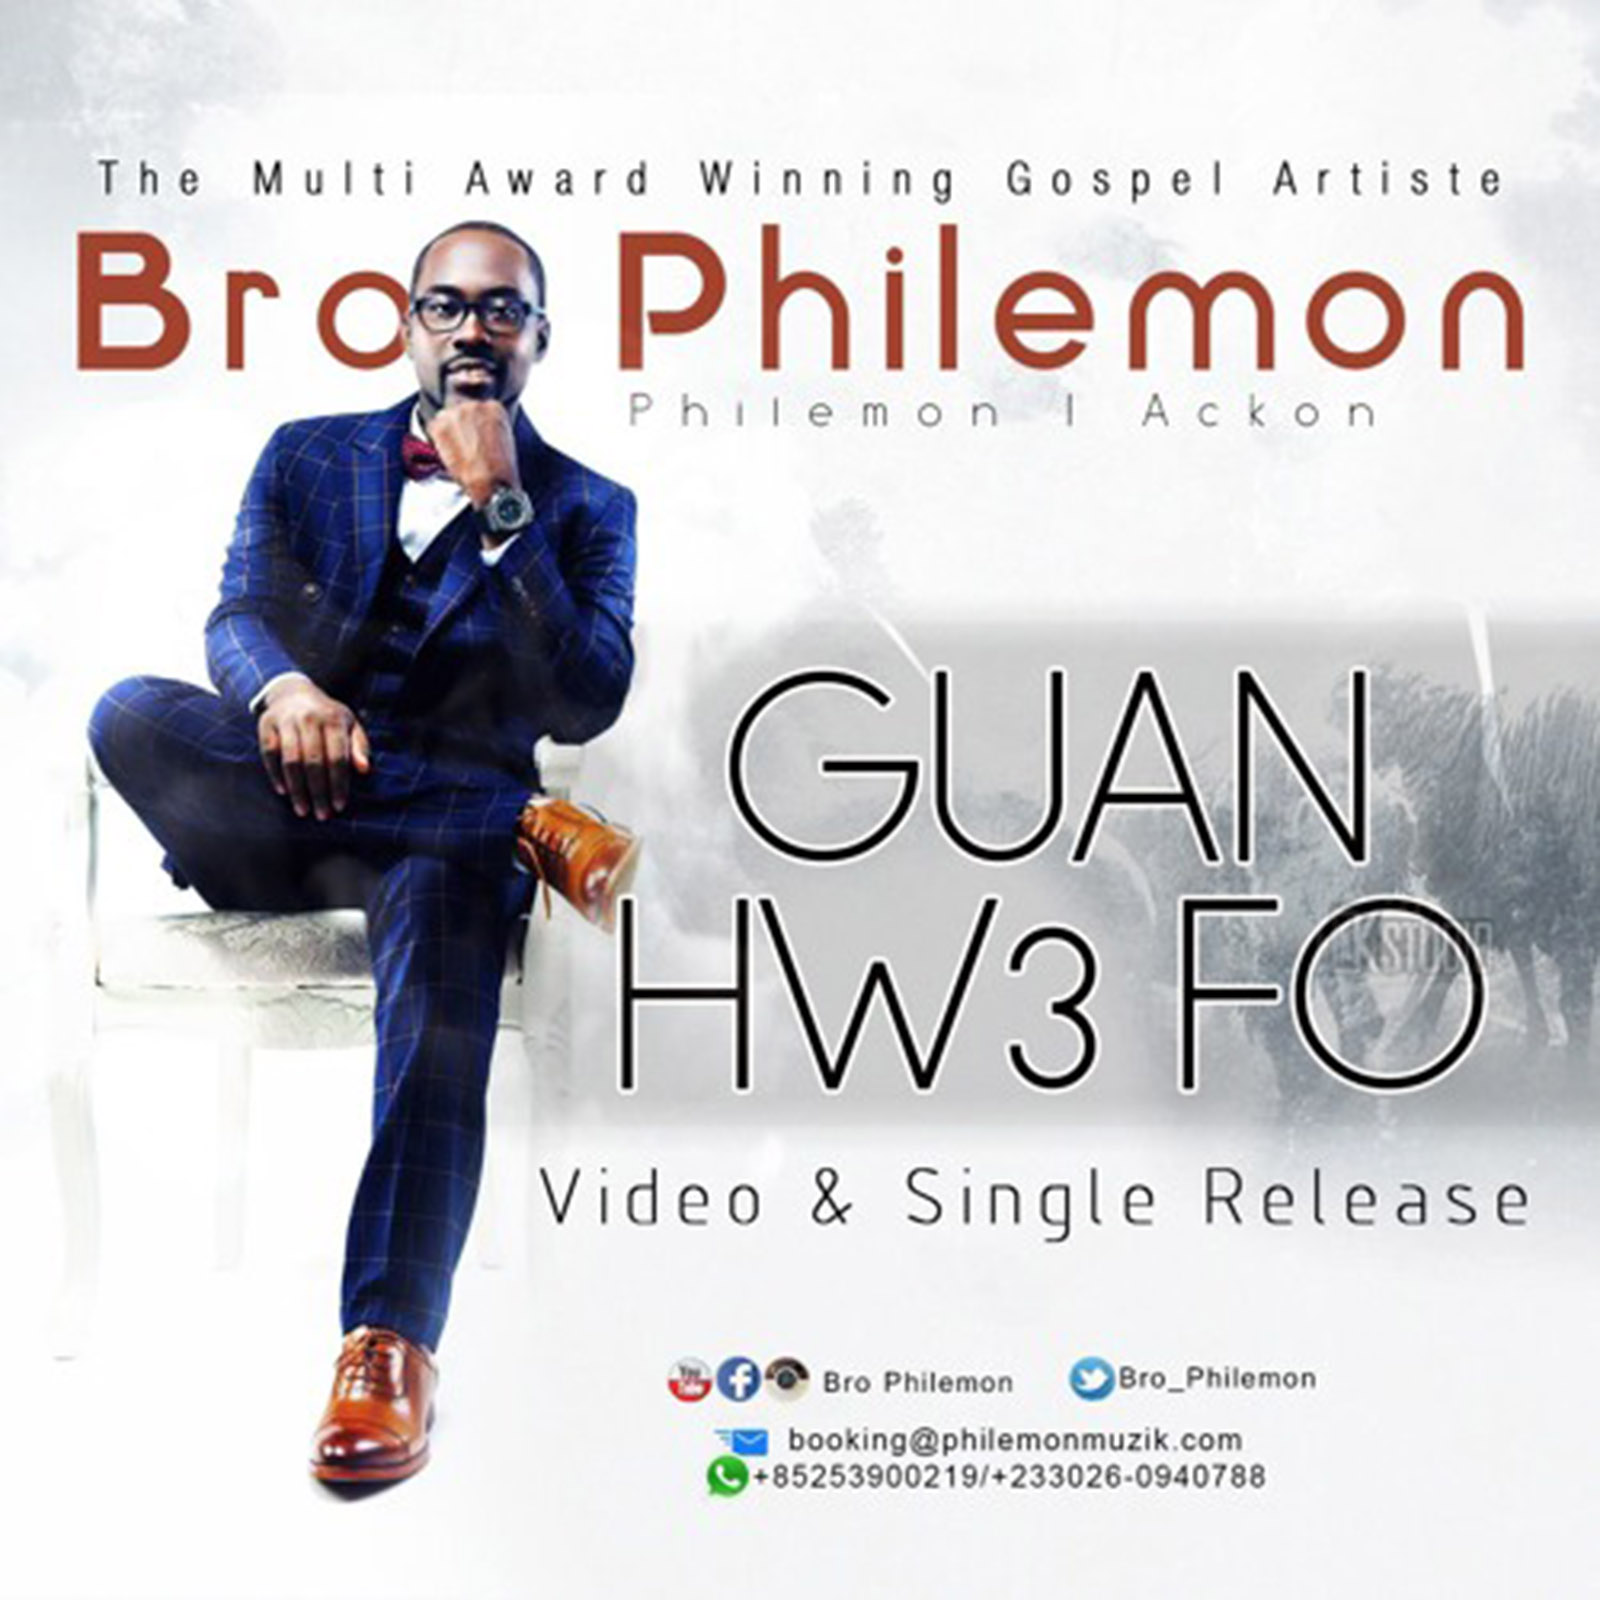 Guan Hw3 Fo by Bro. Philemon